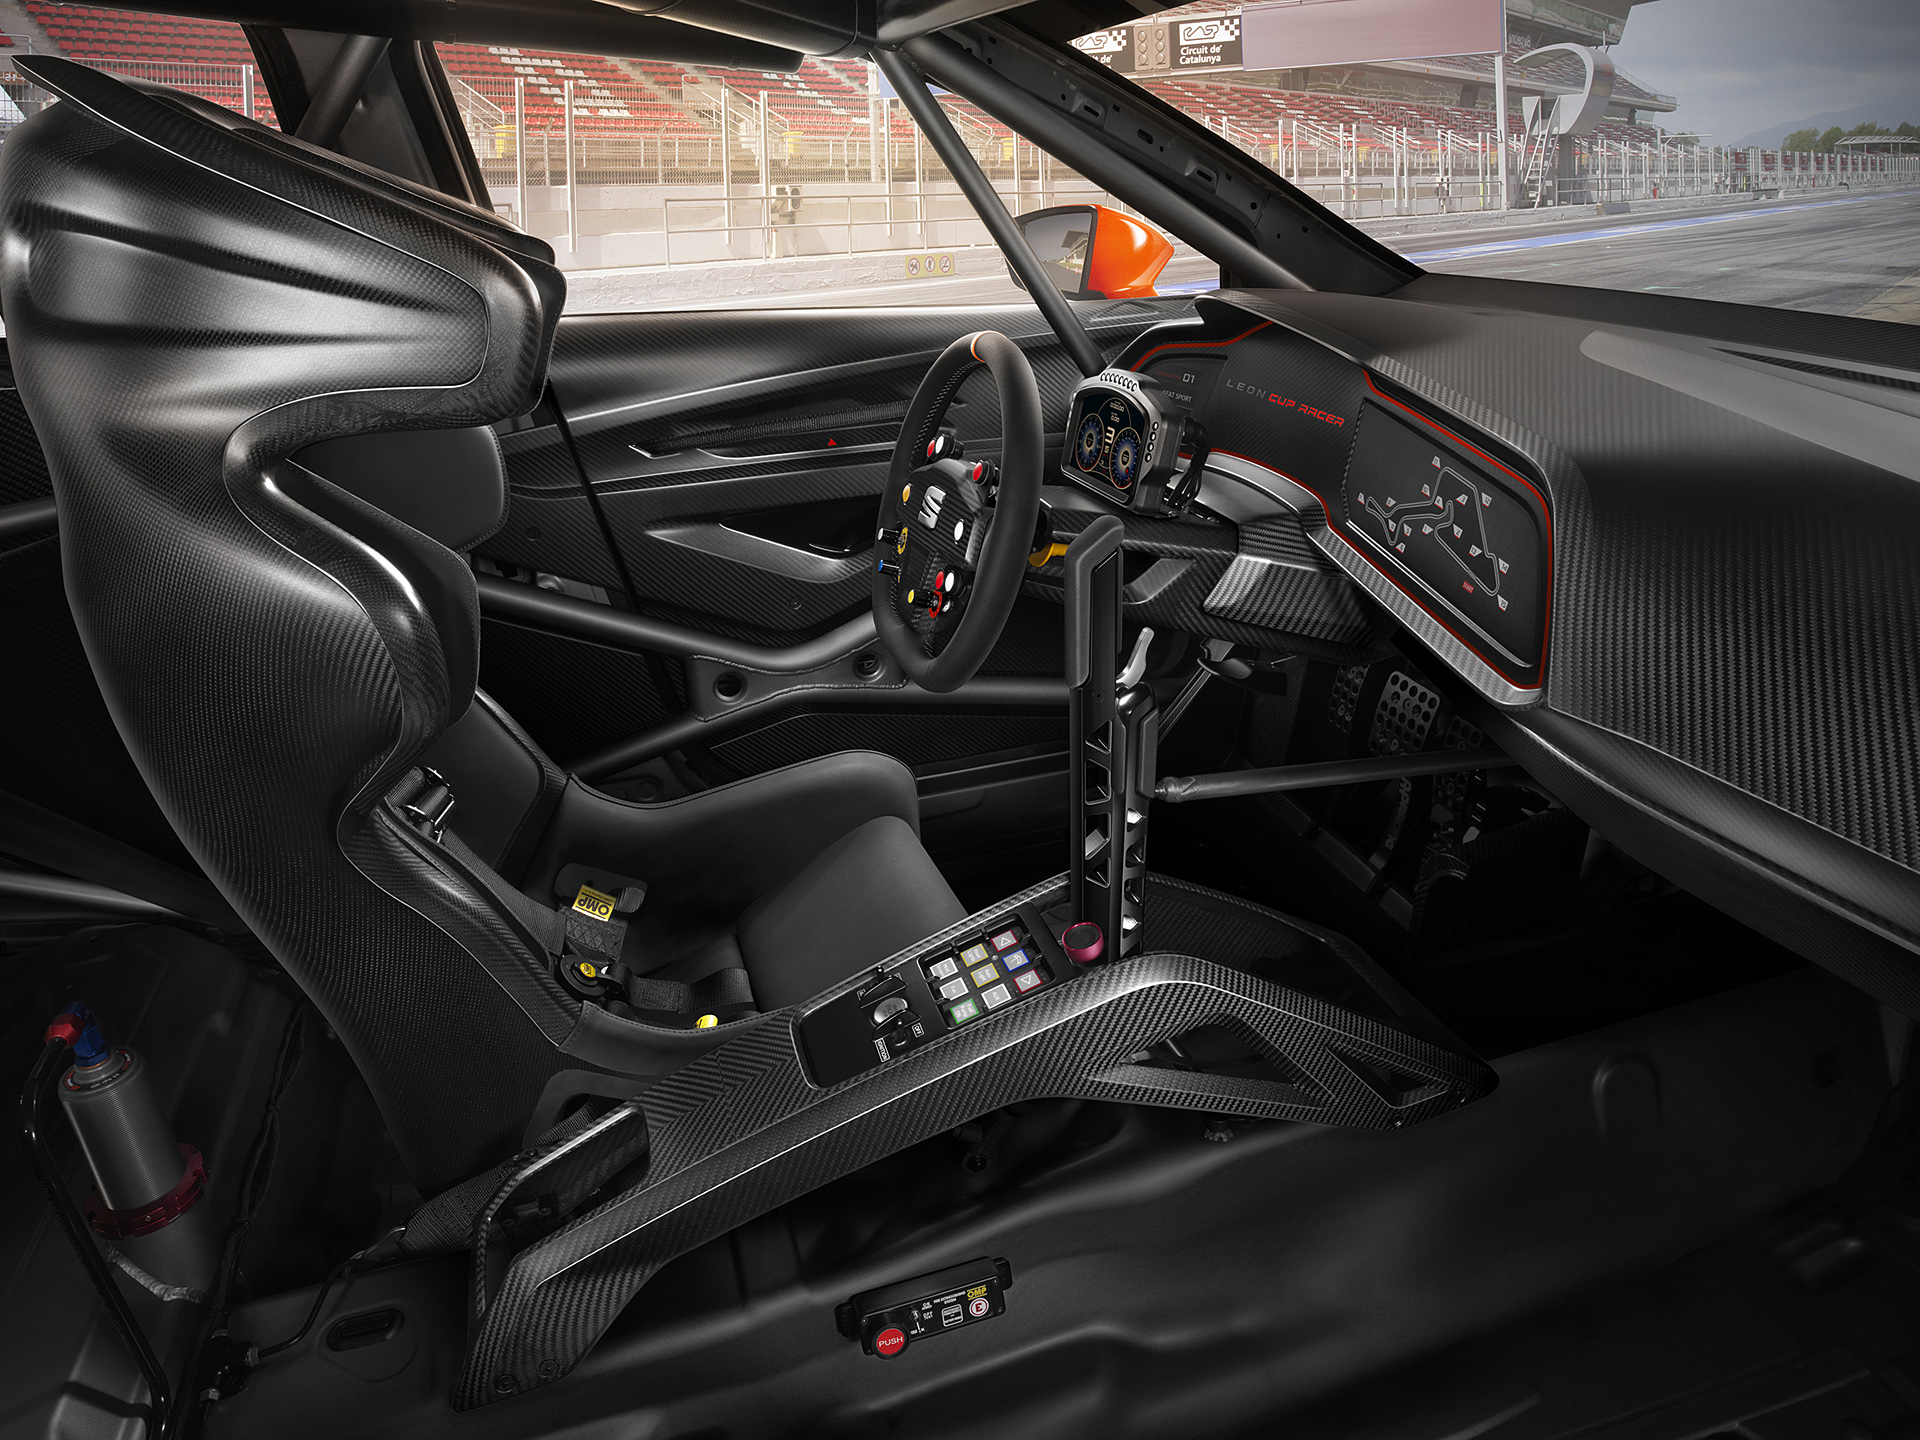  2013 Seat Leon Cup Racer Concept Wallpaper.